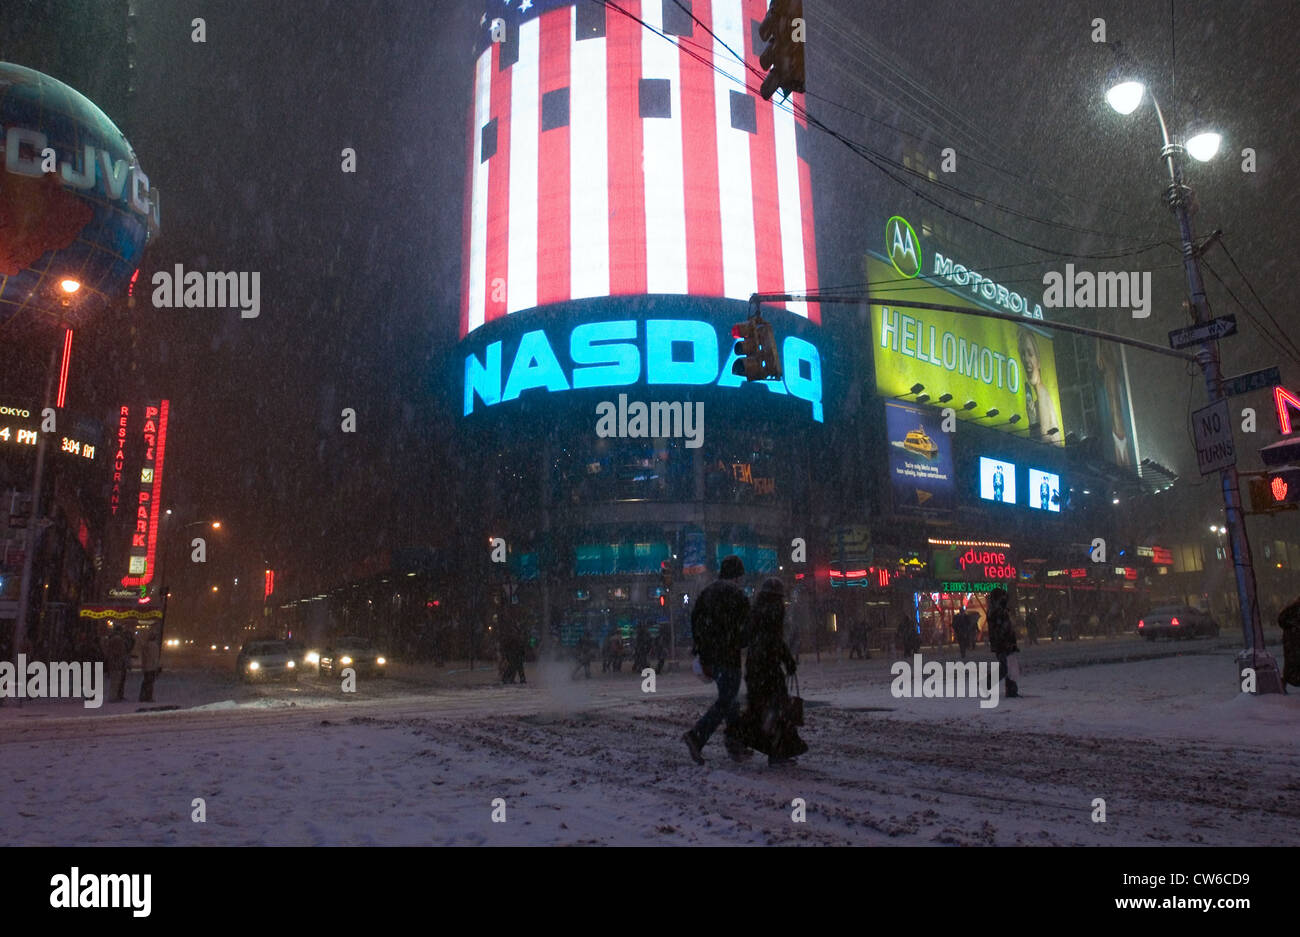 NASDAQ New York Stock Photo